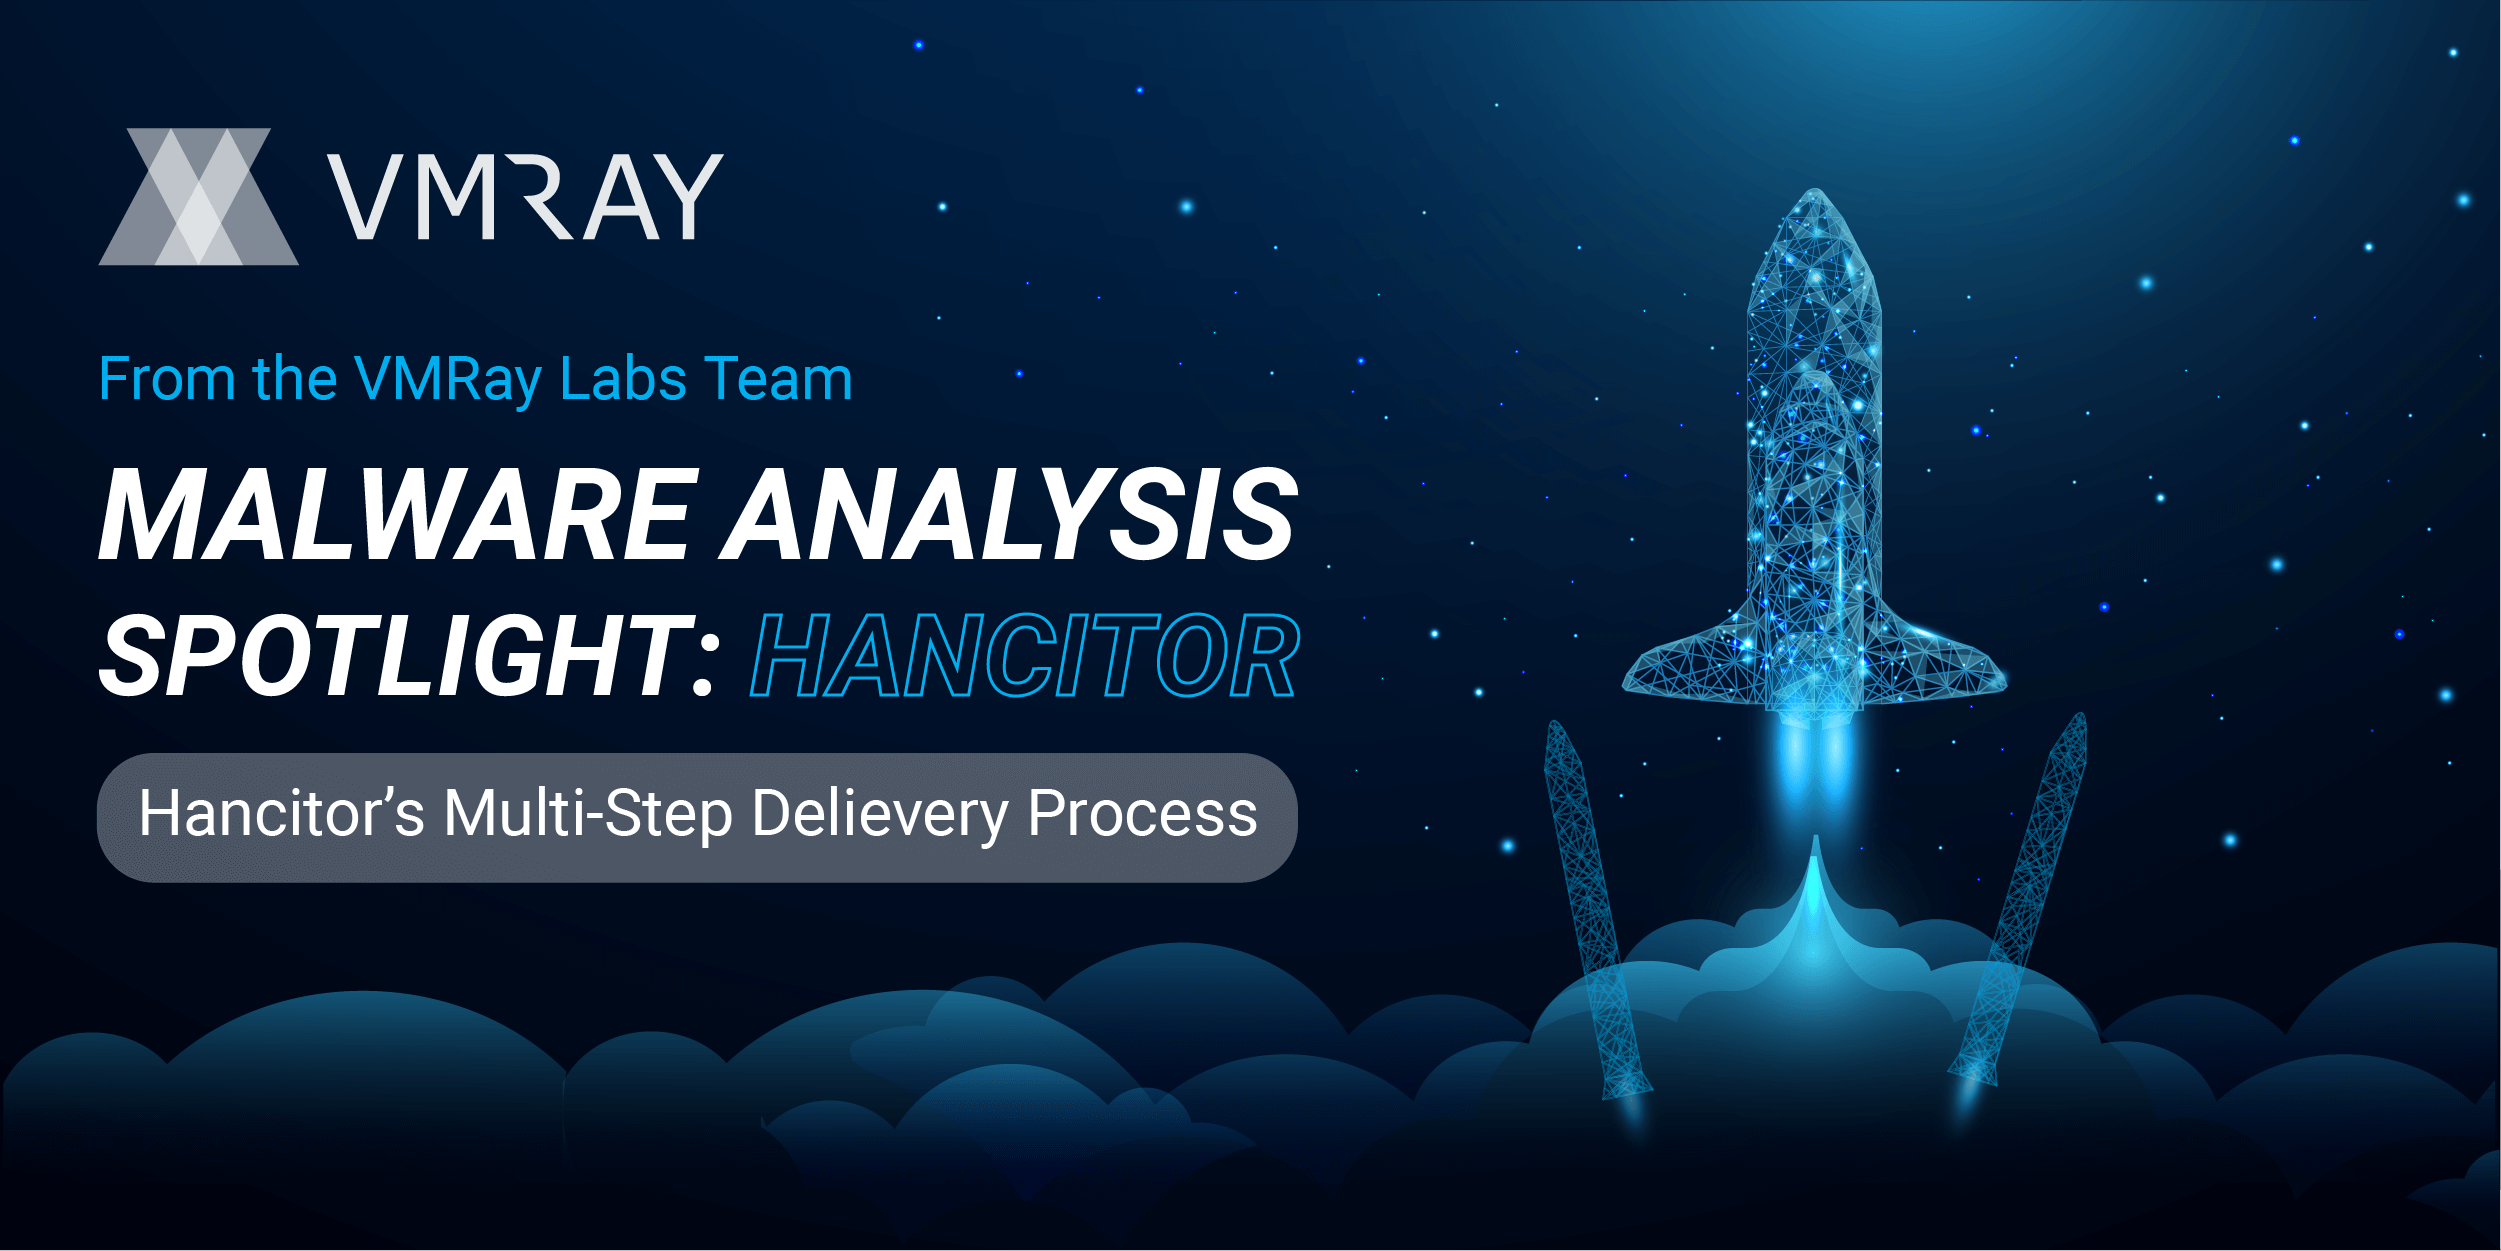 Hancitor - Multi-Step Delivery Process - Malware Analysis Spotlight